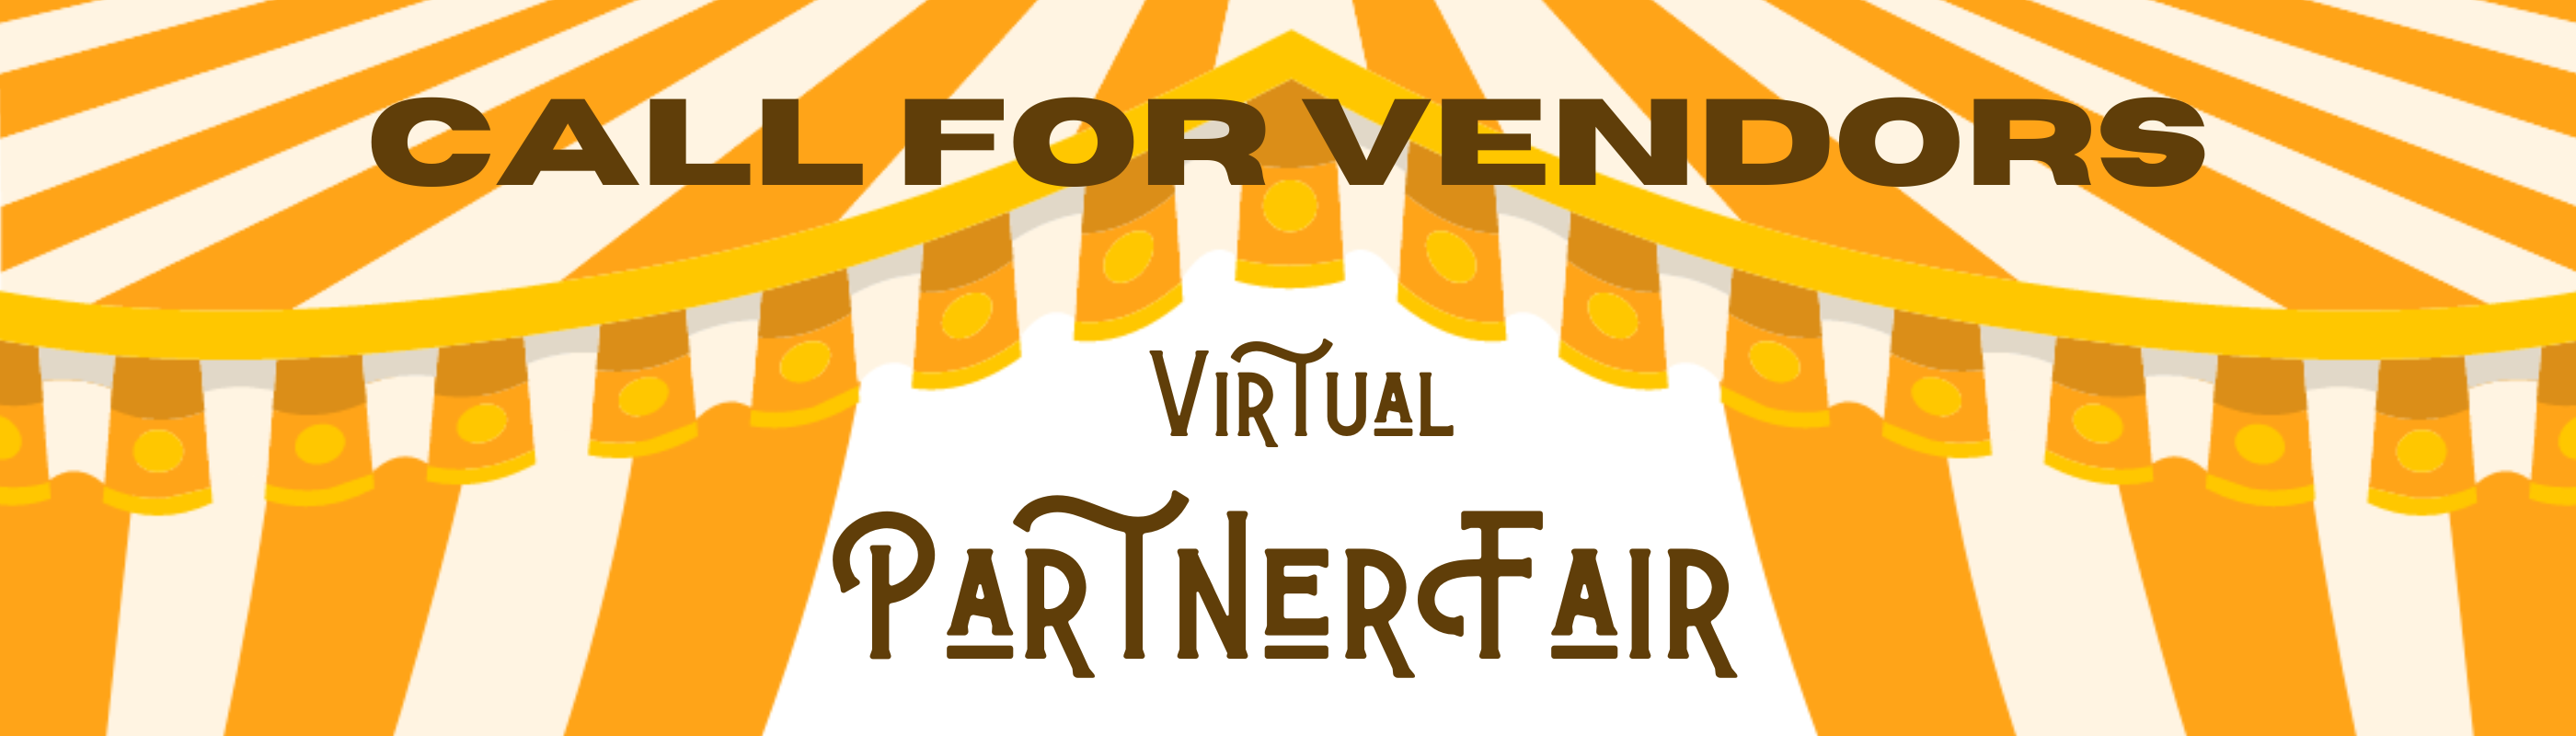 Call for Vendors: Virtual Partner Fair